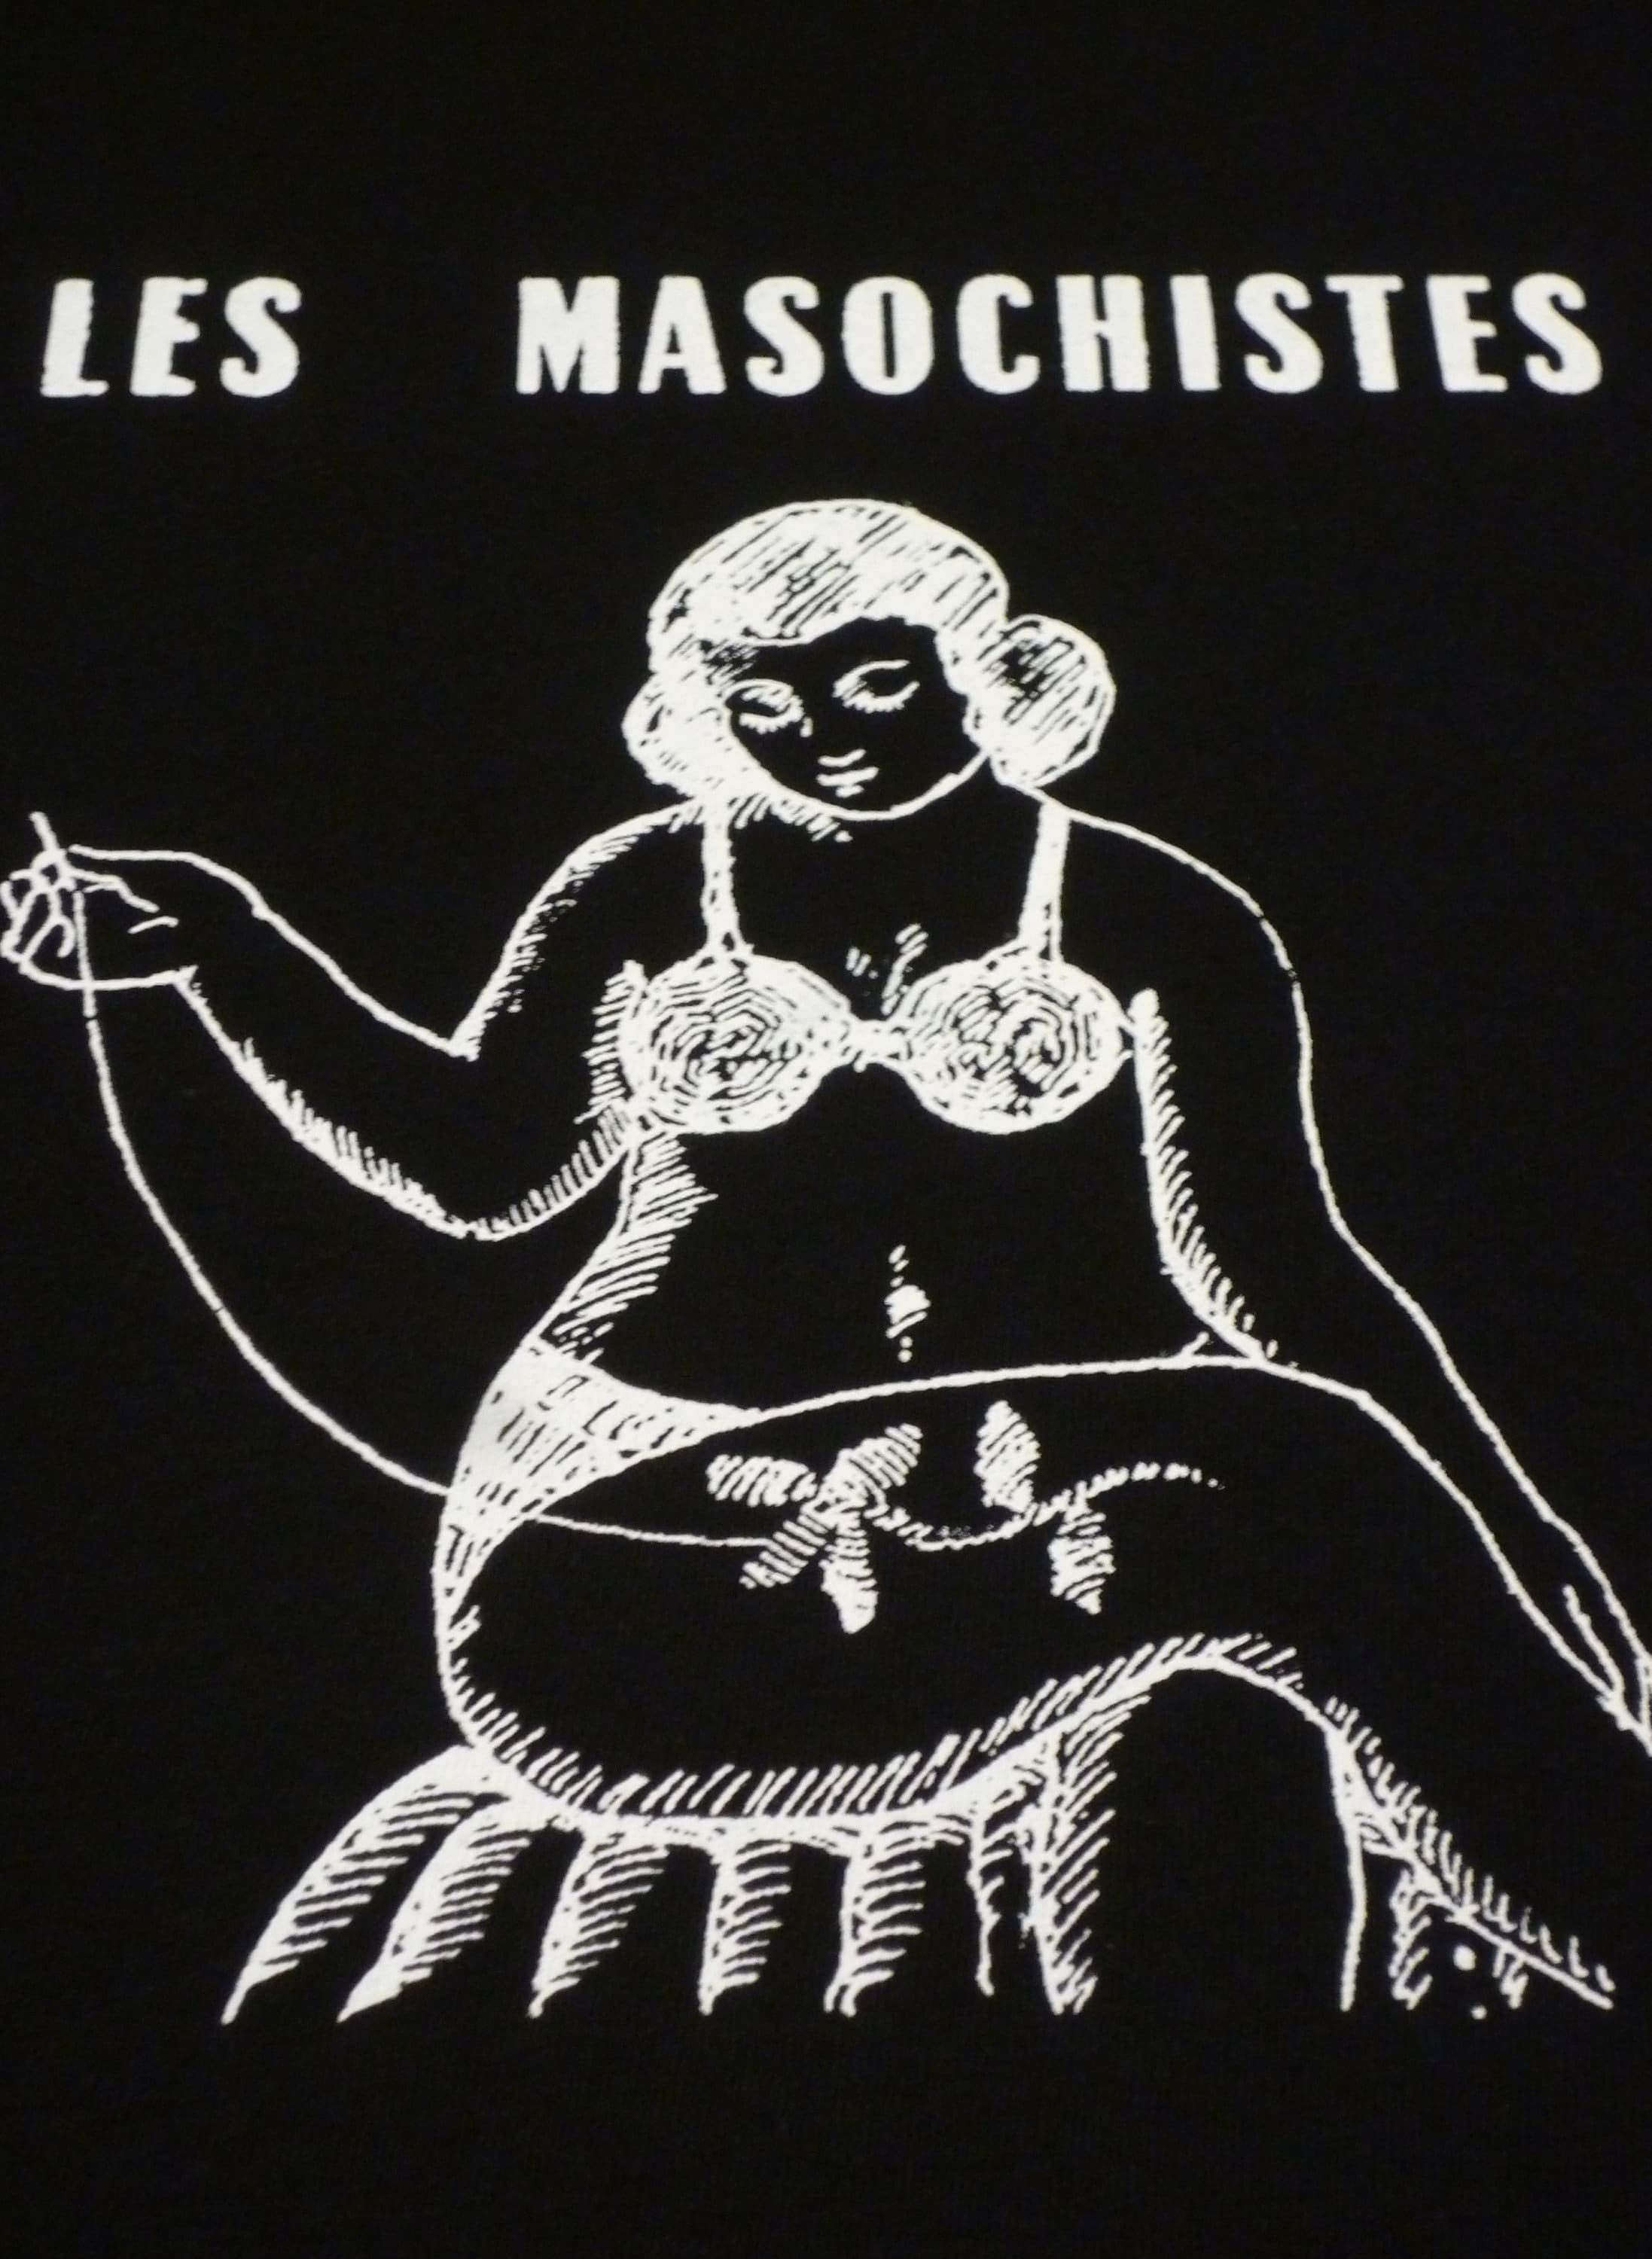 Discover MASOCHISM FETISH VINTAGE - t shirt-